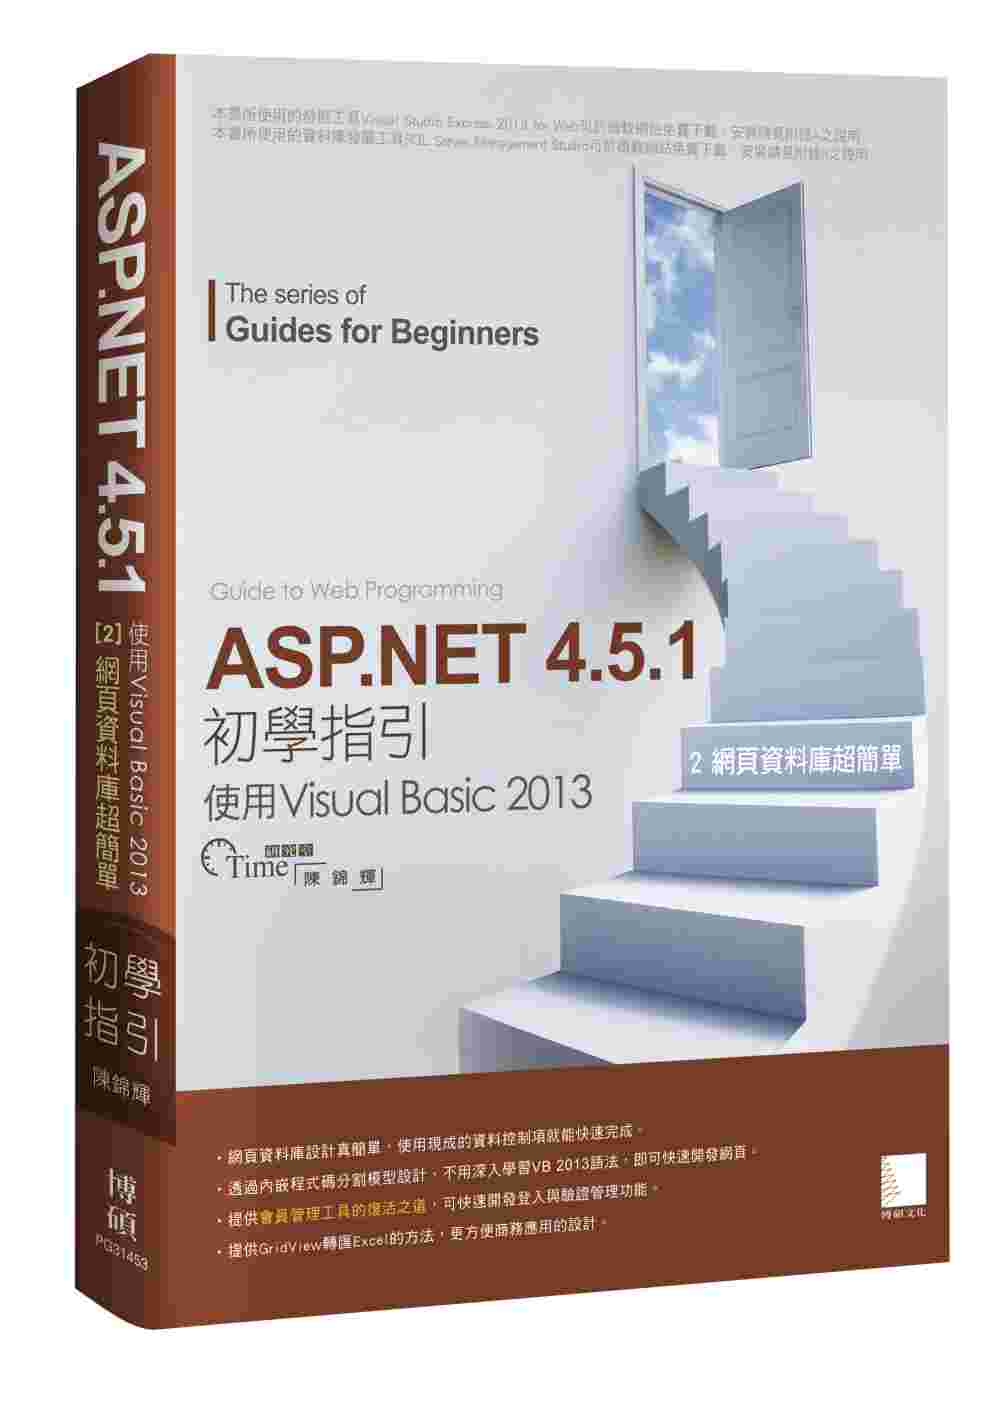 ►GO►最新優惠► 【書籍】ASP.NET 4.5.1 初學指引[2] - 使用Visual Basic 2013：網頁資料庫超簡單